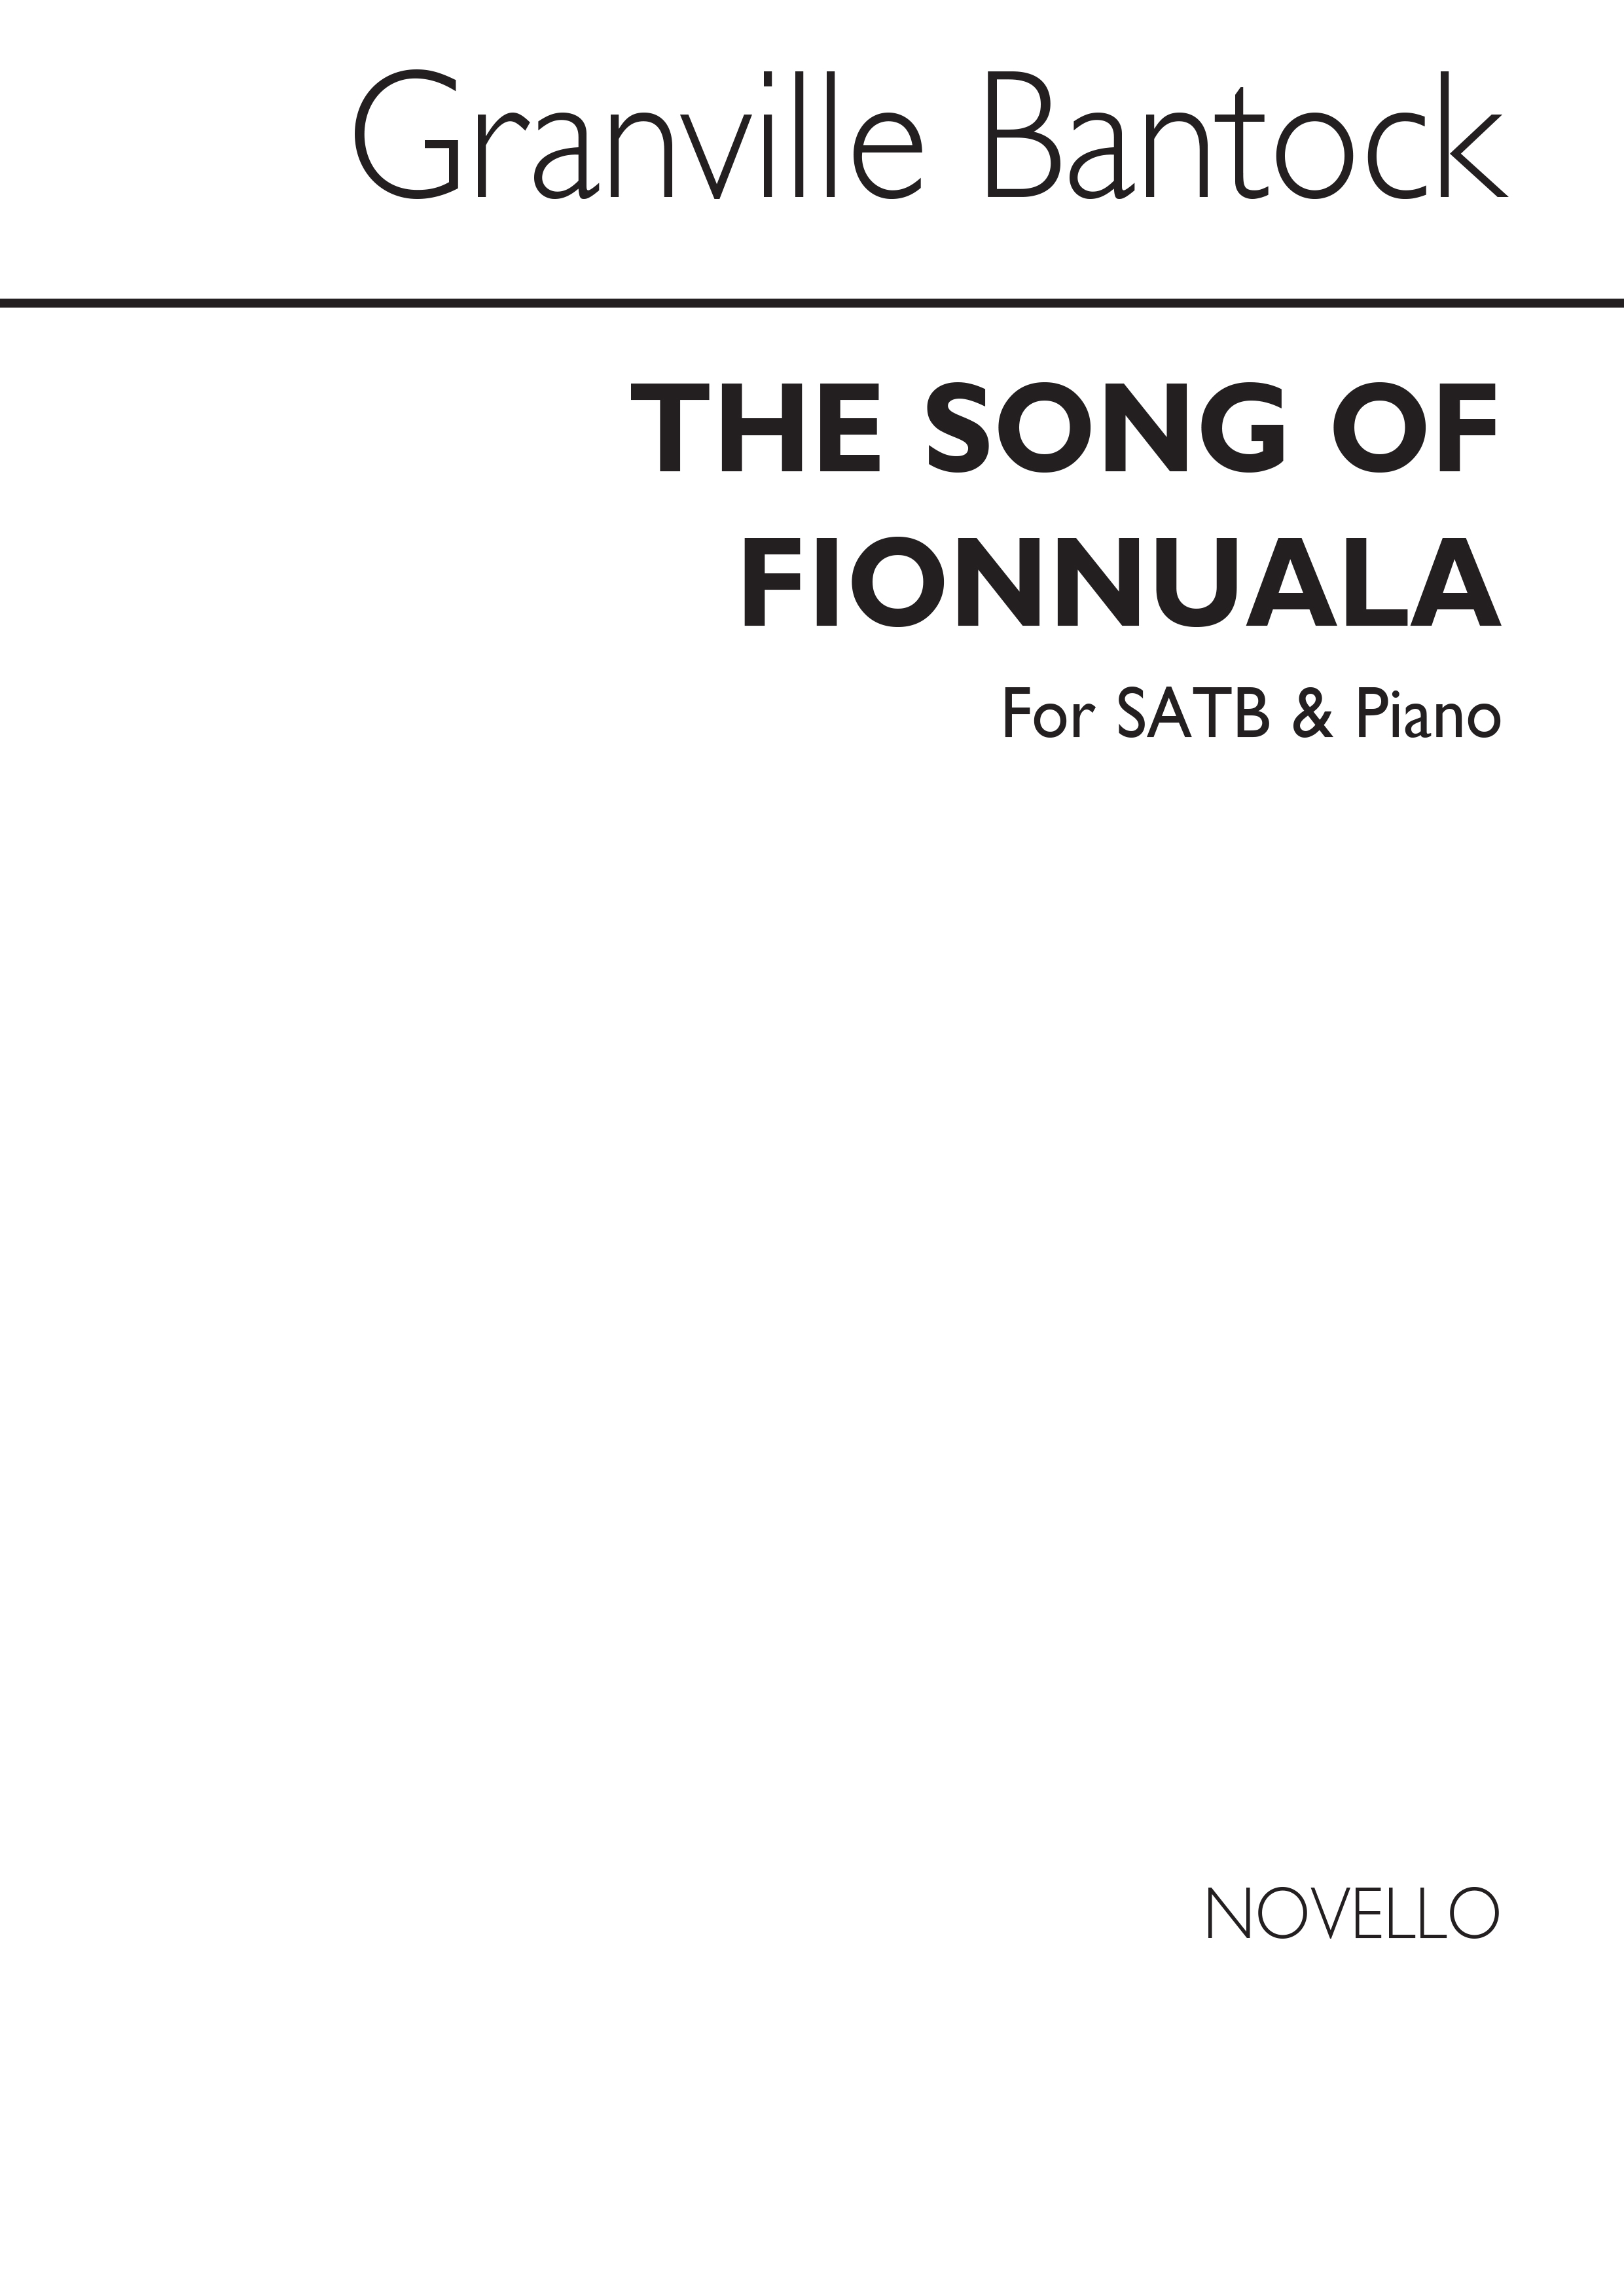 Granville Bantock: The Song Of Fionnuala Satb/Piano